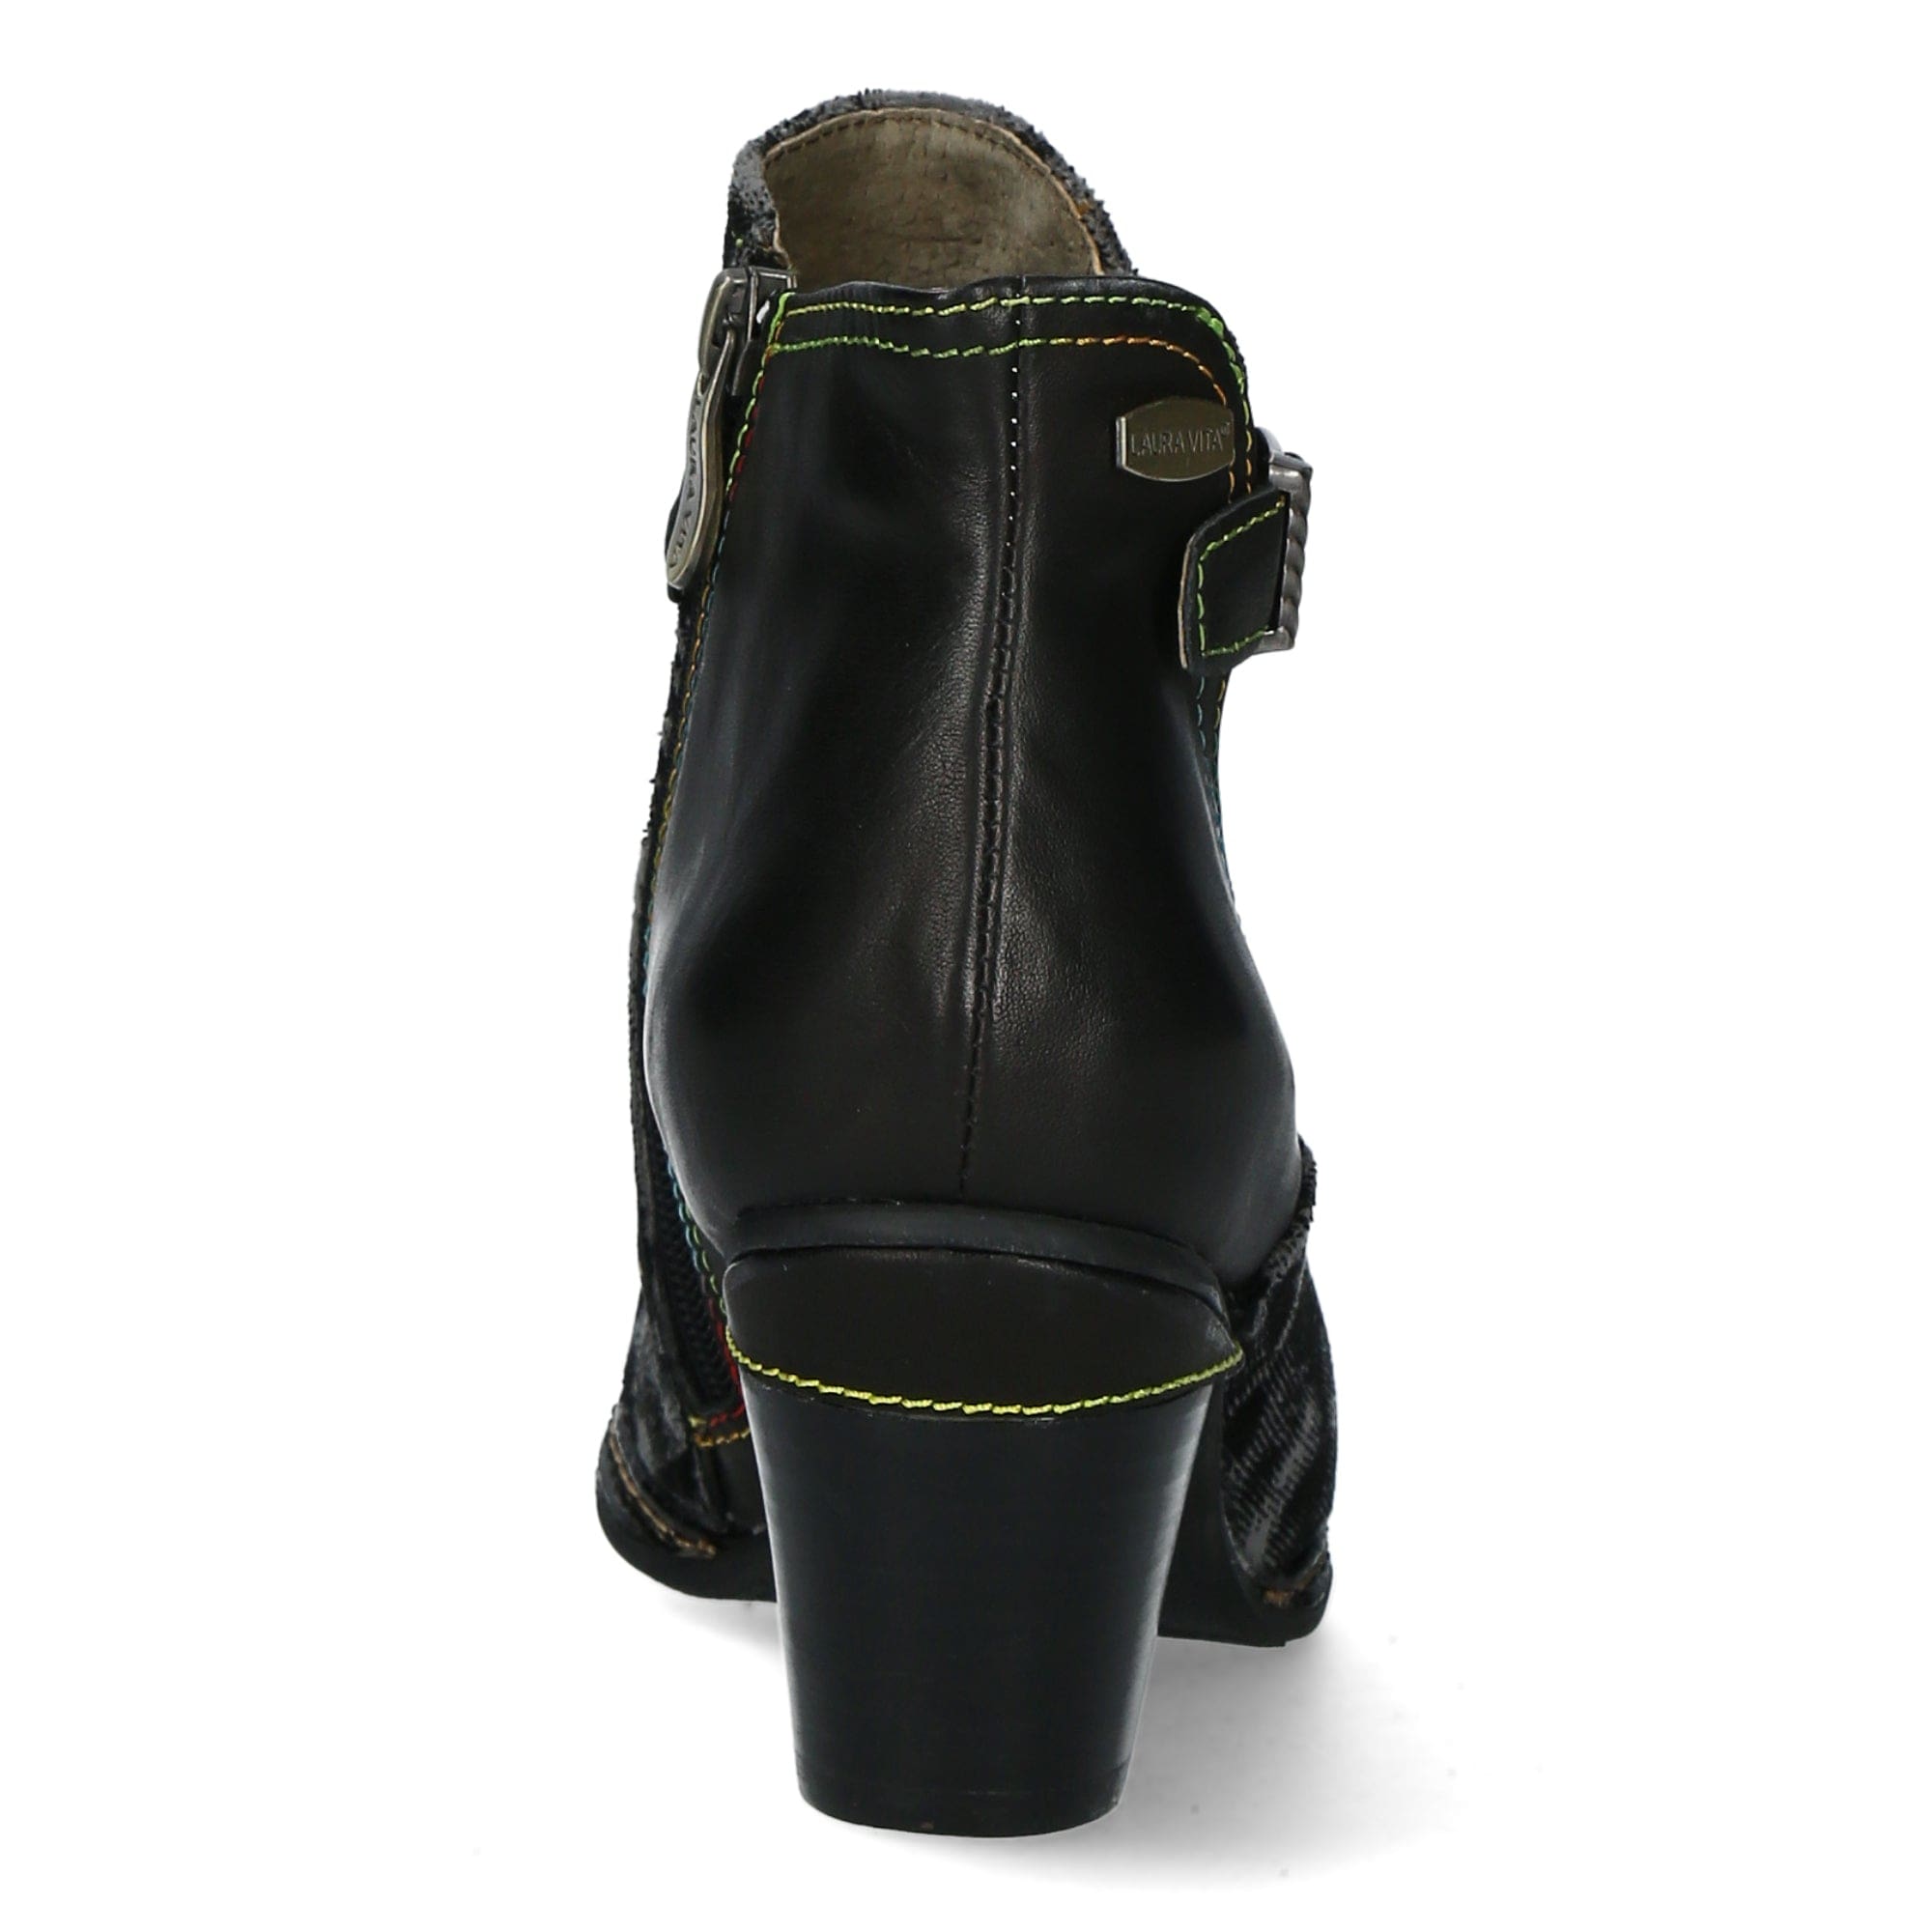 Chaussure AGCATHEO 197C - Boots